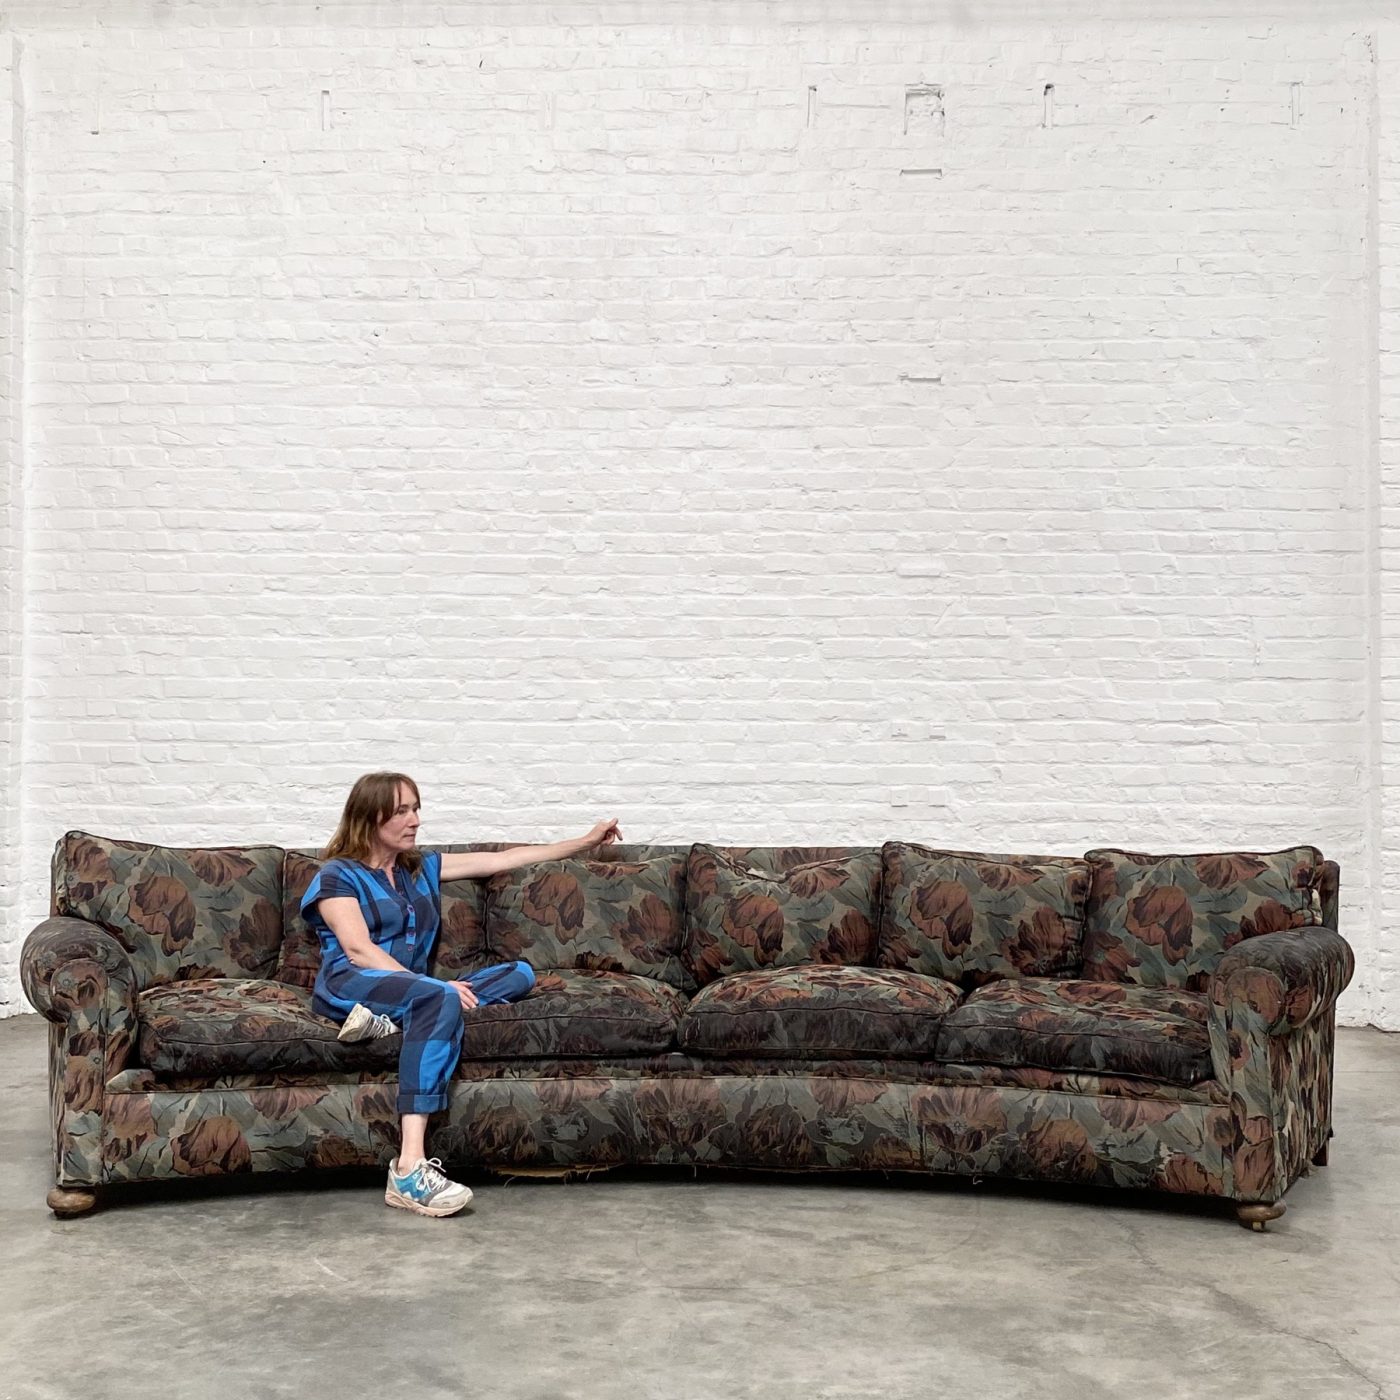 objet-vagabond-huge-sofa0000